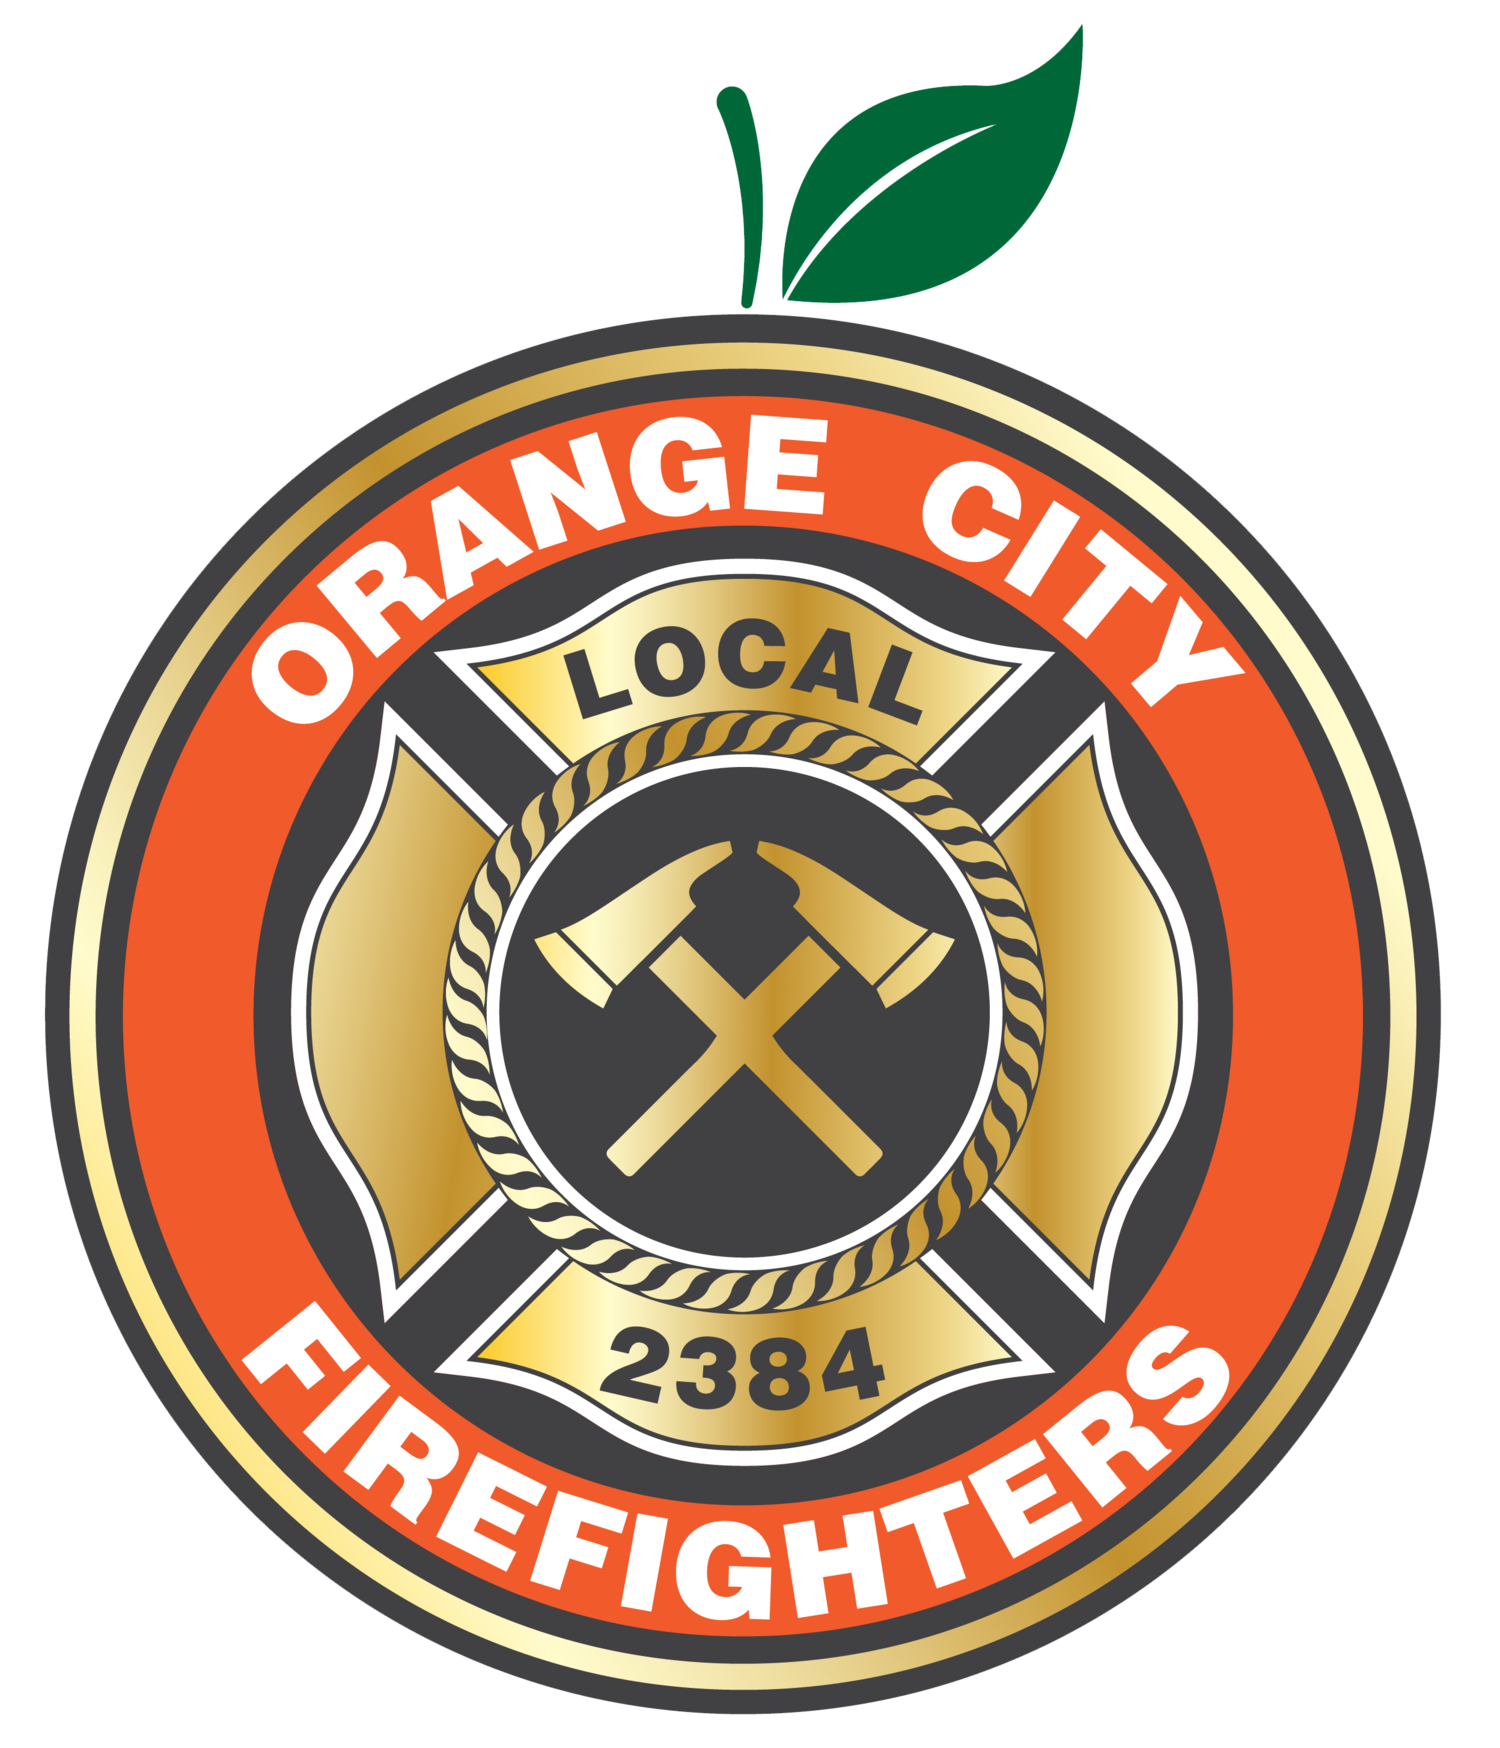 Orange City Firefighters - L2384